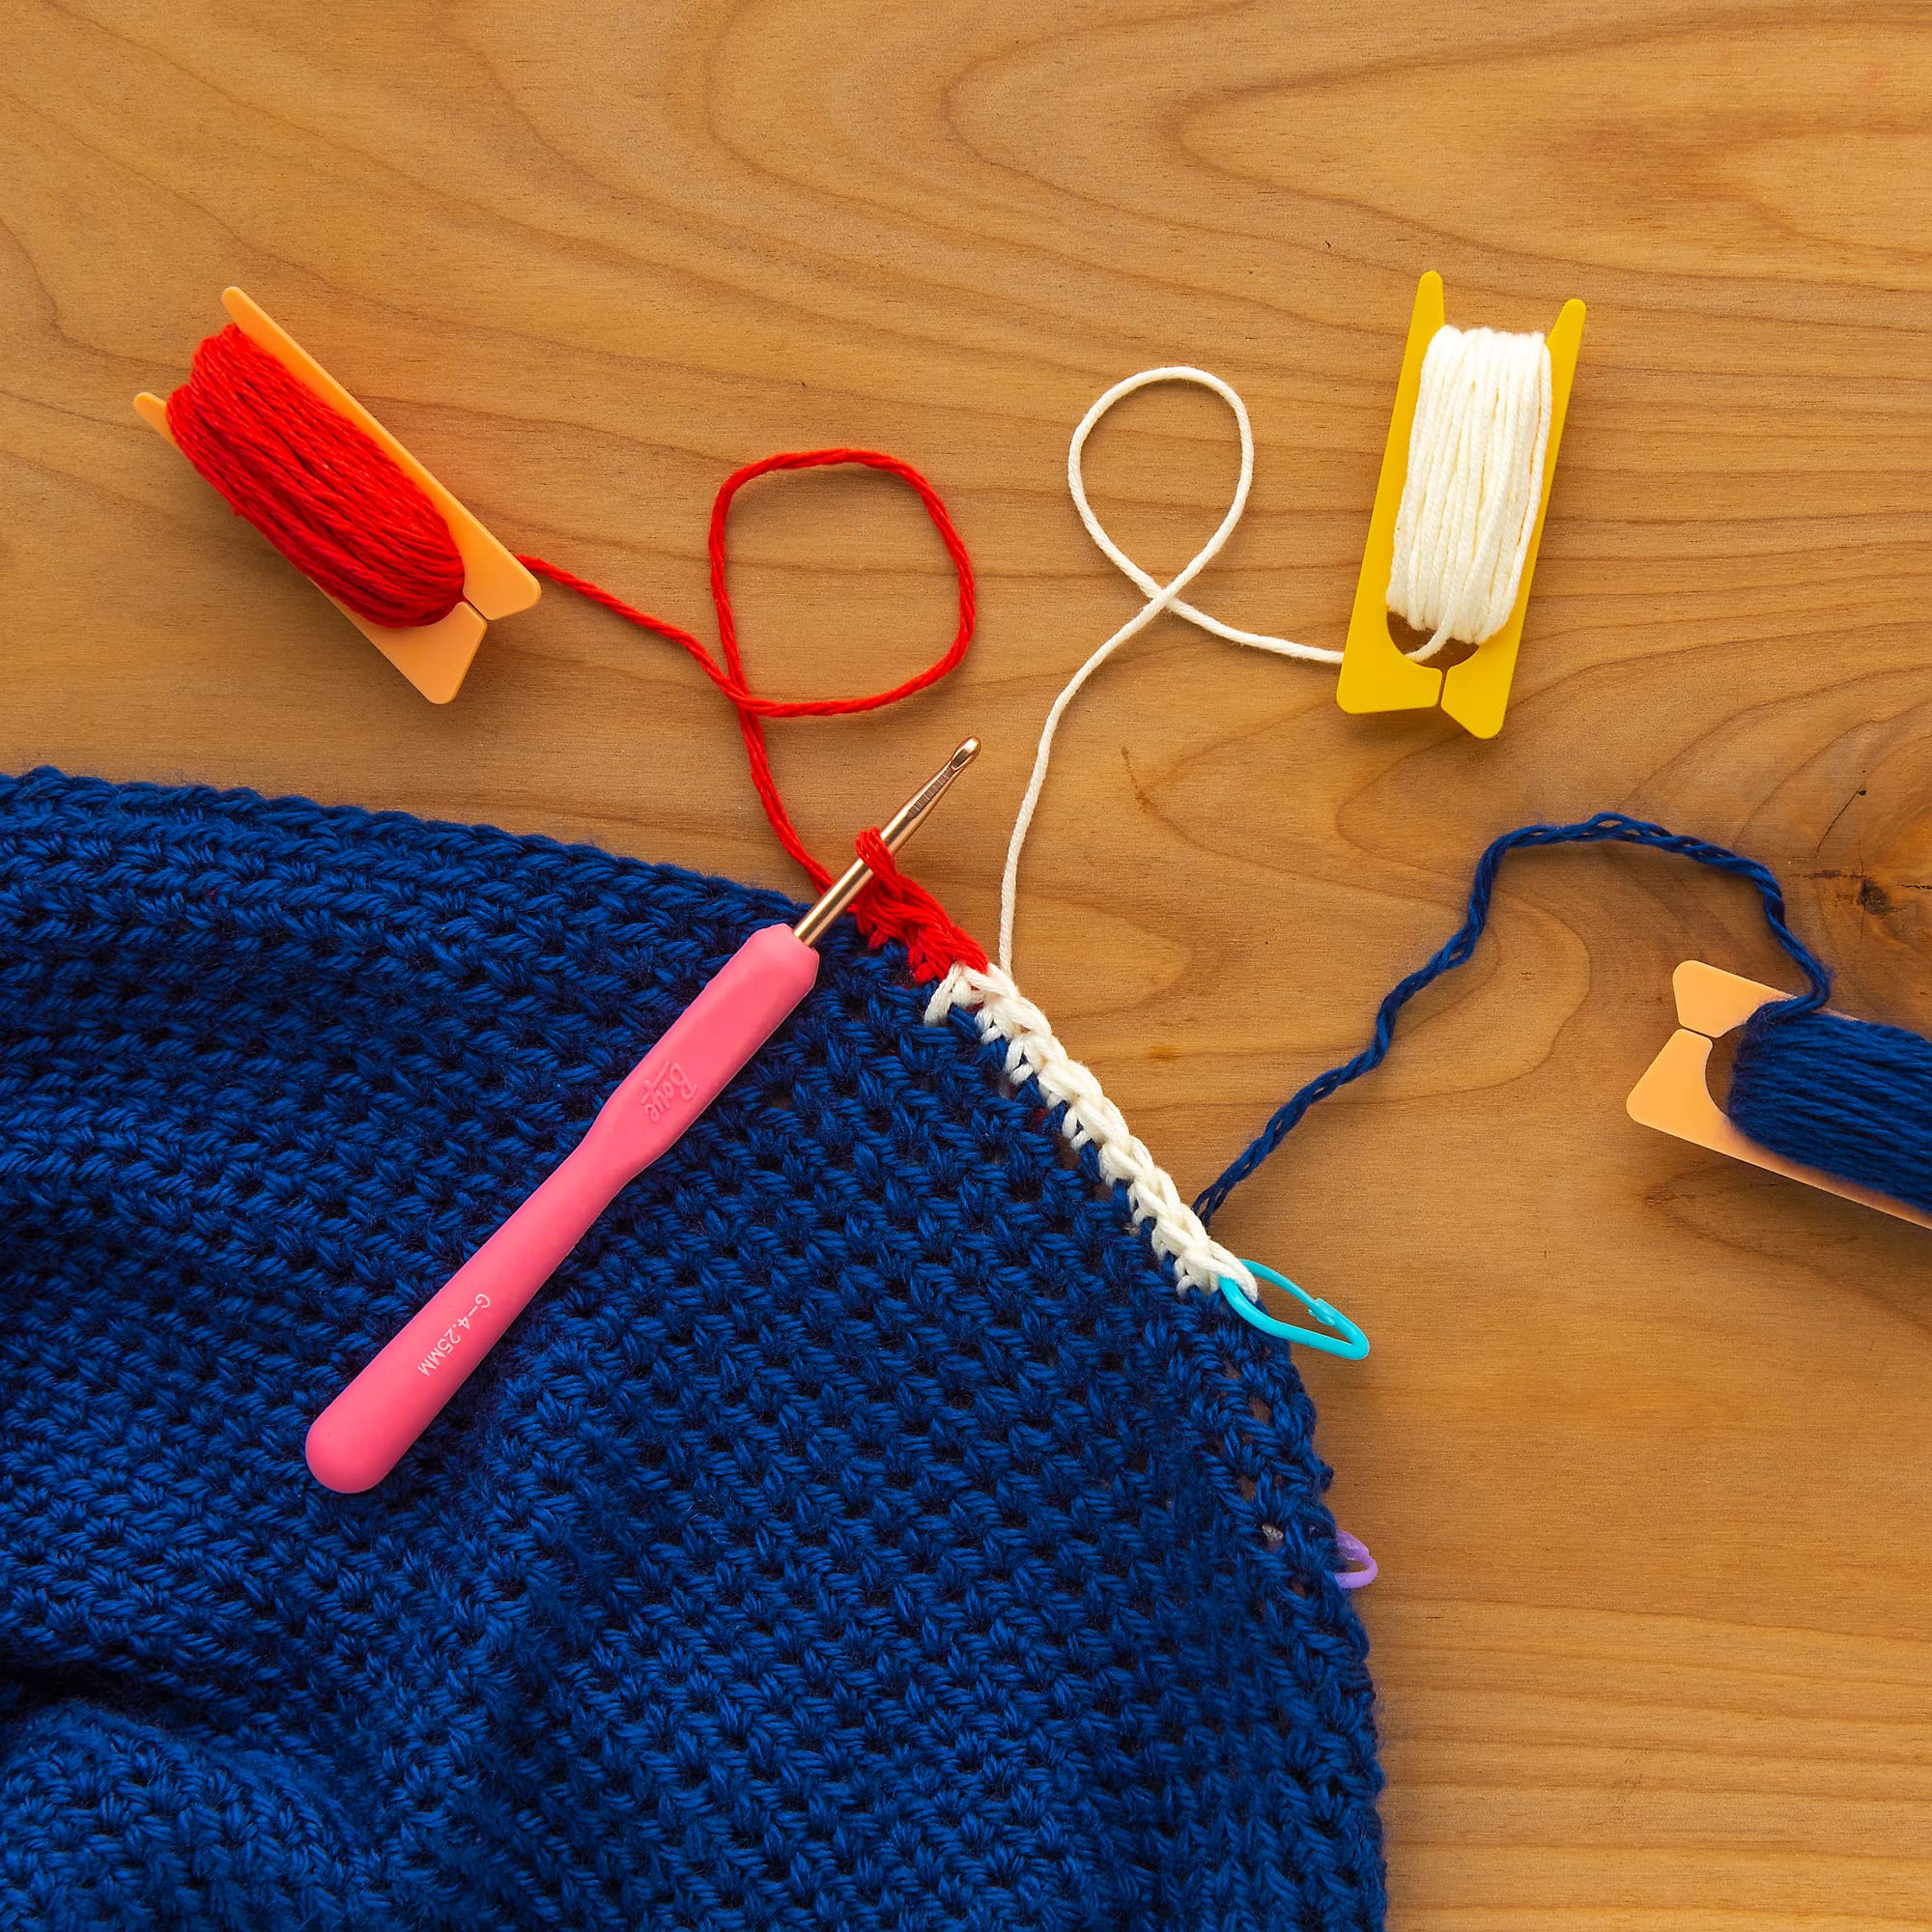 Boye Light and Medium Weight Yarn Bobbins for Knitting and Crochet, 2.625